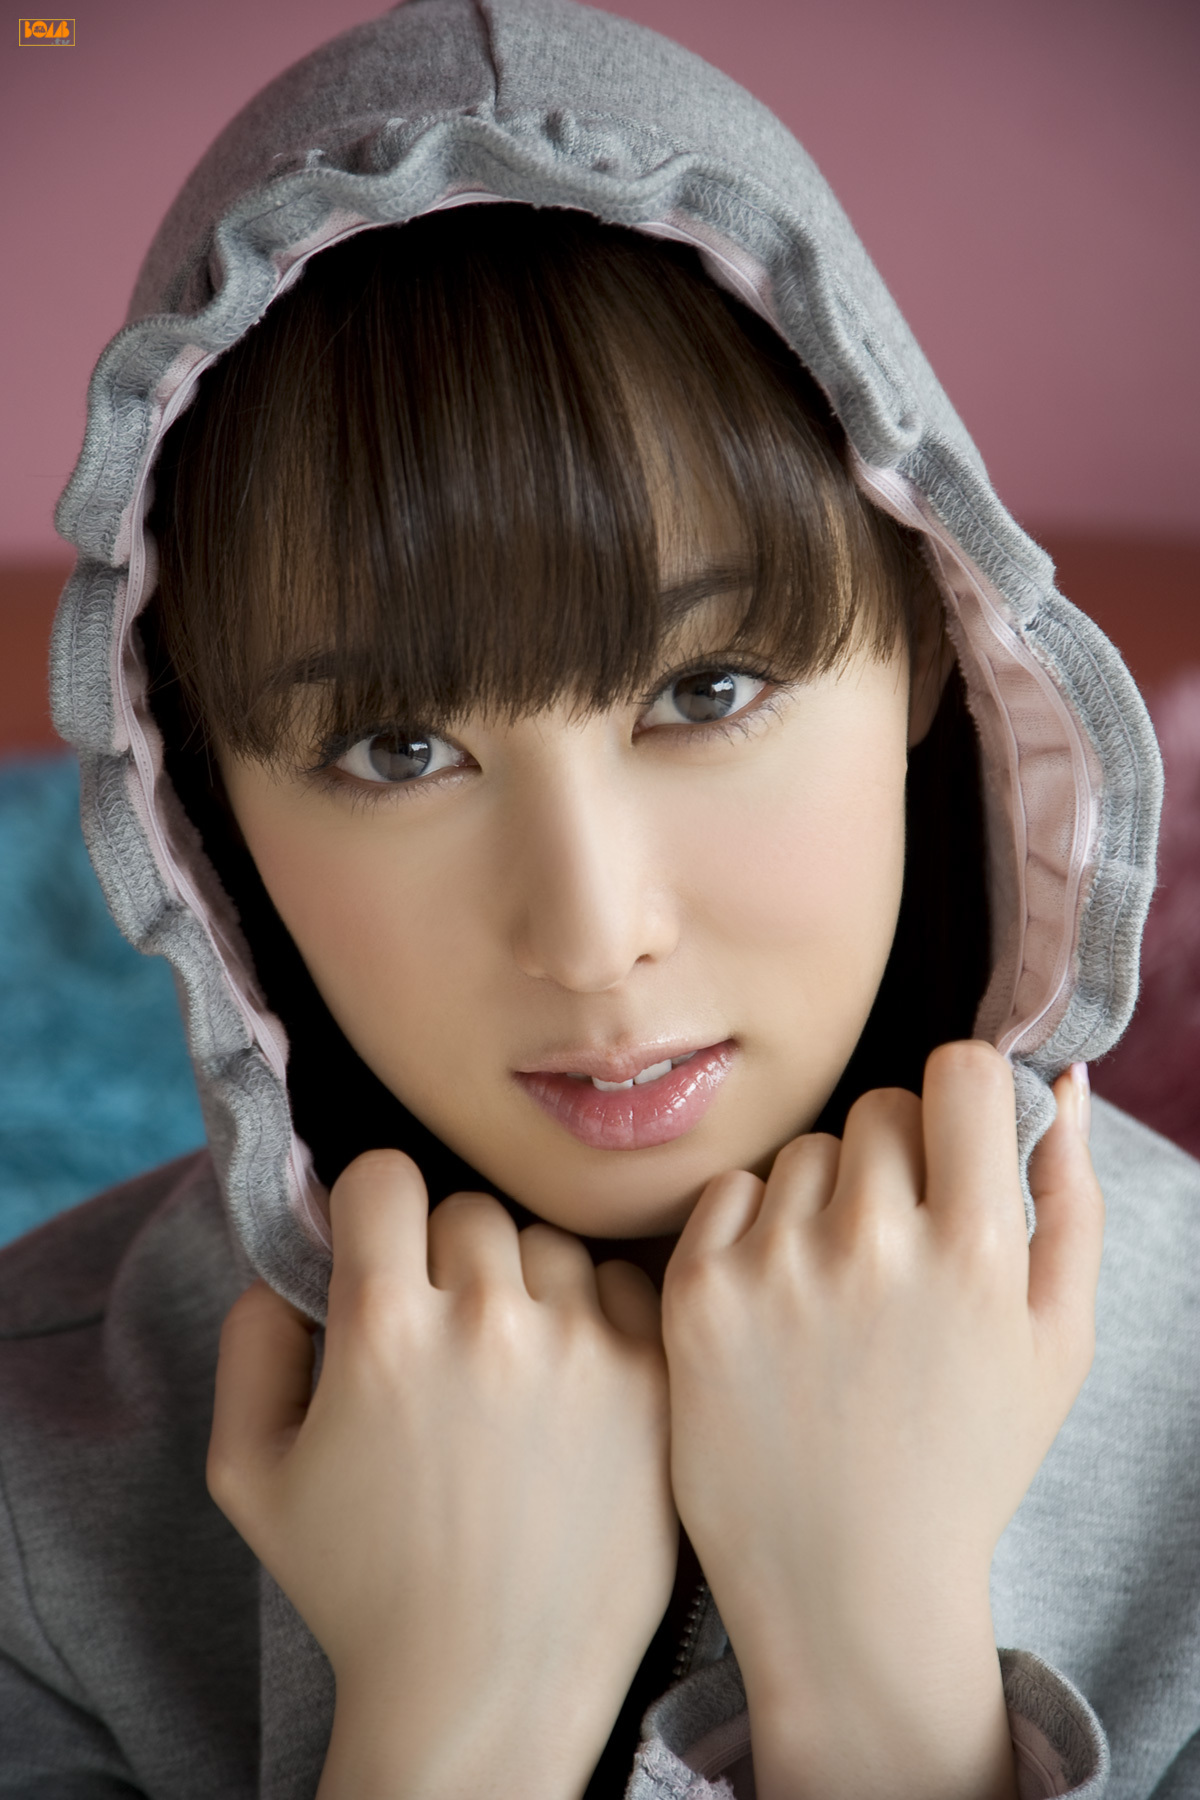 Rina Akiyama, a Japanese Beauty Bomb.TV